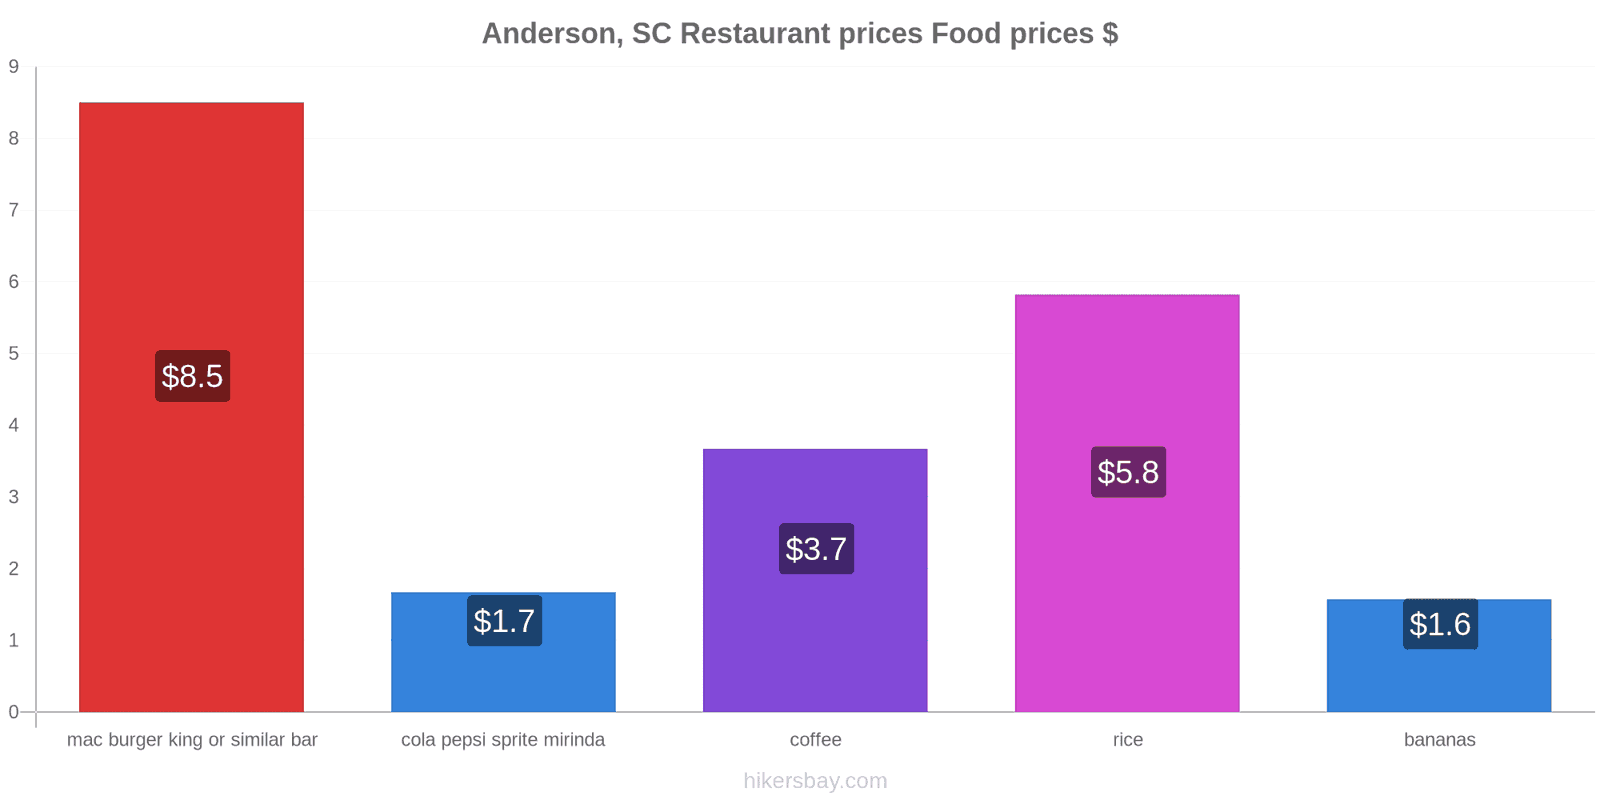 Anderson, SC price changes hikersbay.com